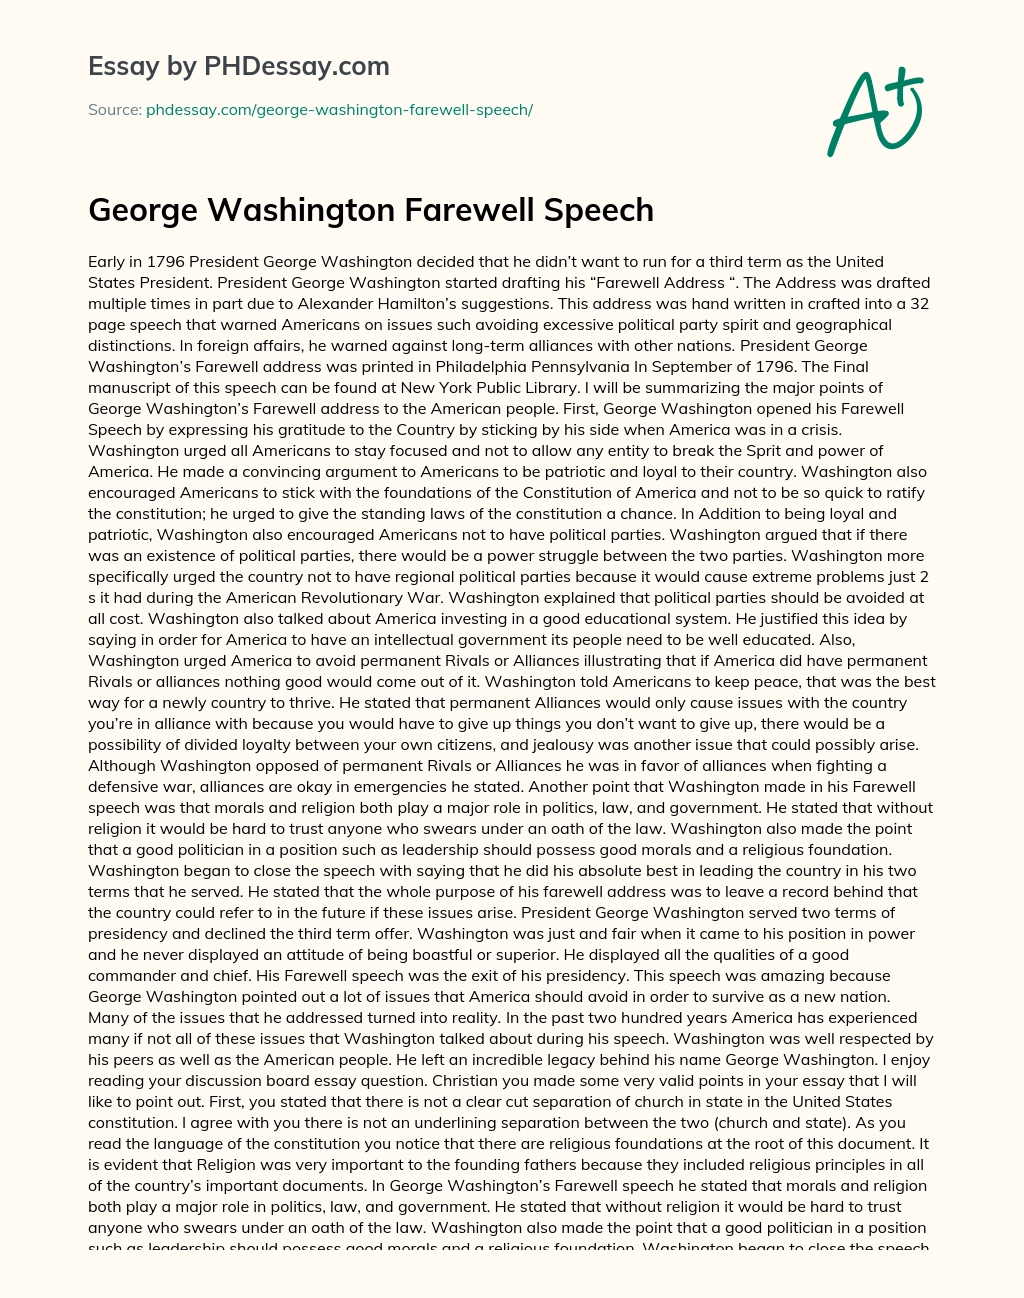 George Washington Farewell Speech essay